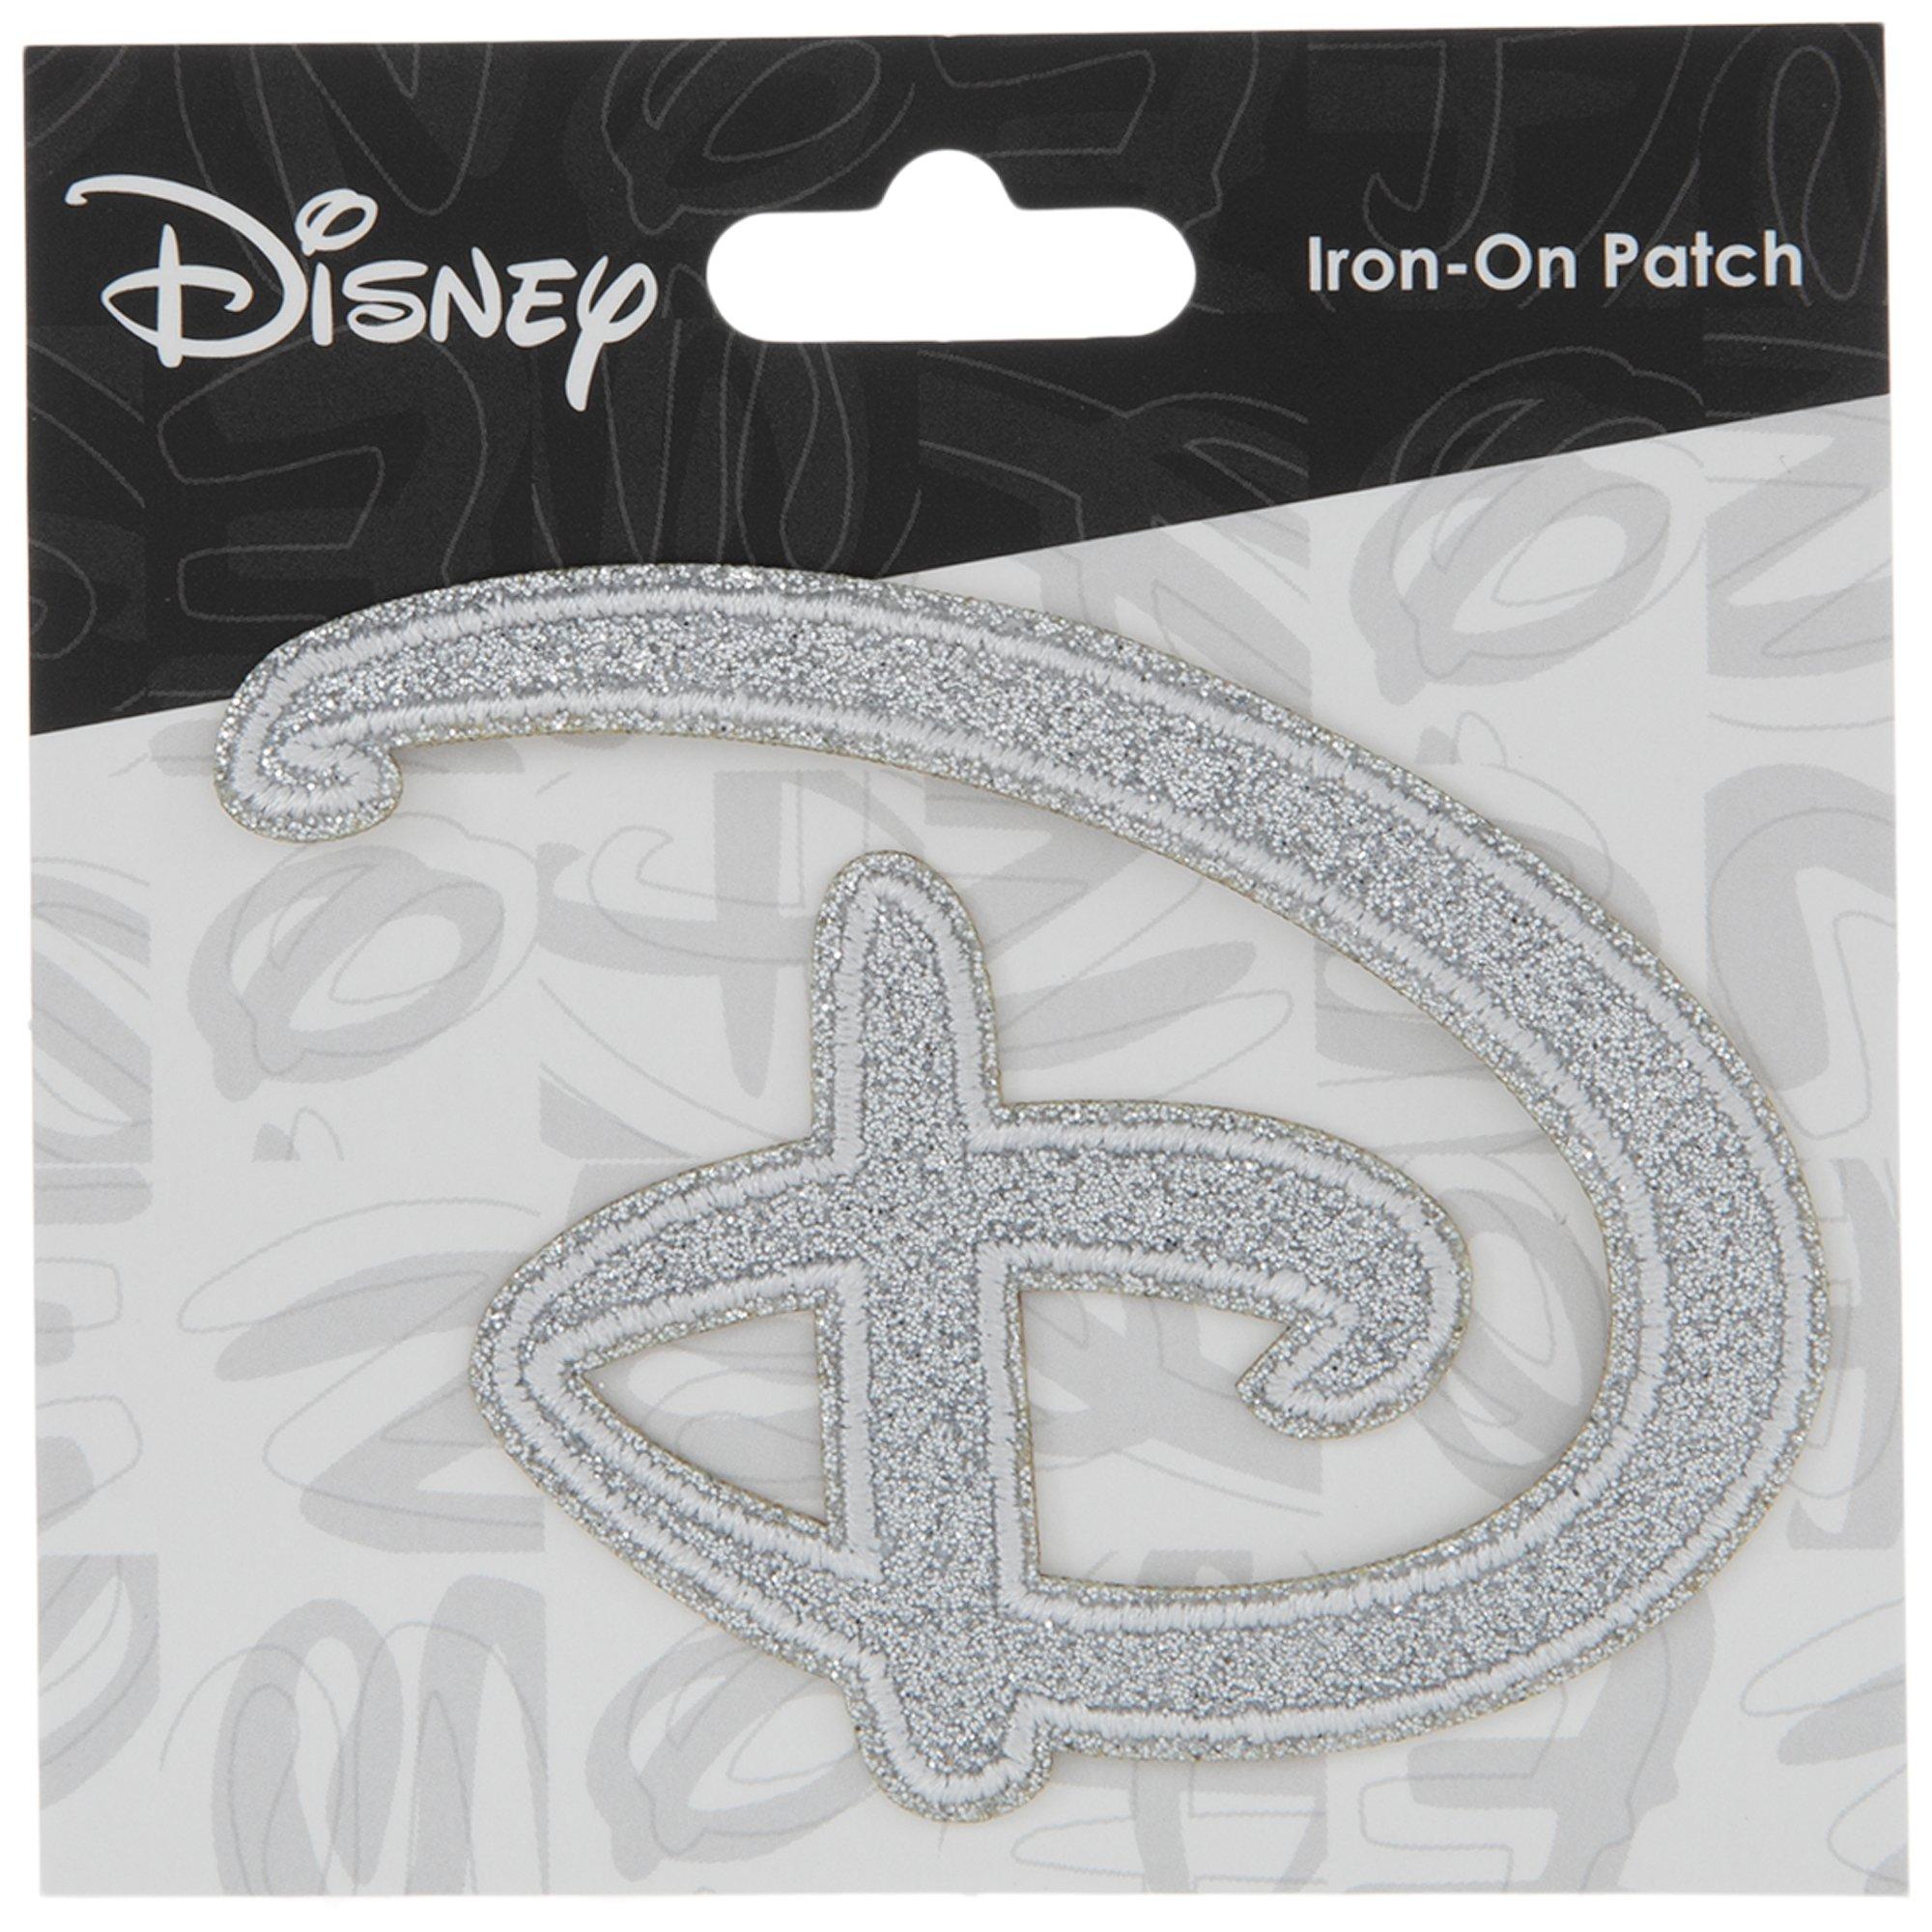 22 Disney Embroidered Patches ideas  disney iron on, embroidered patches,  iron on patches